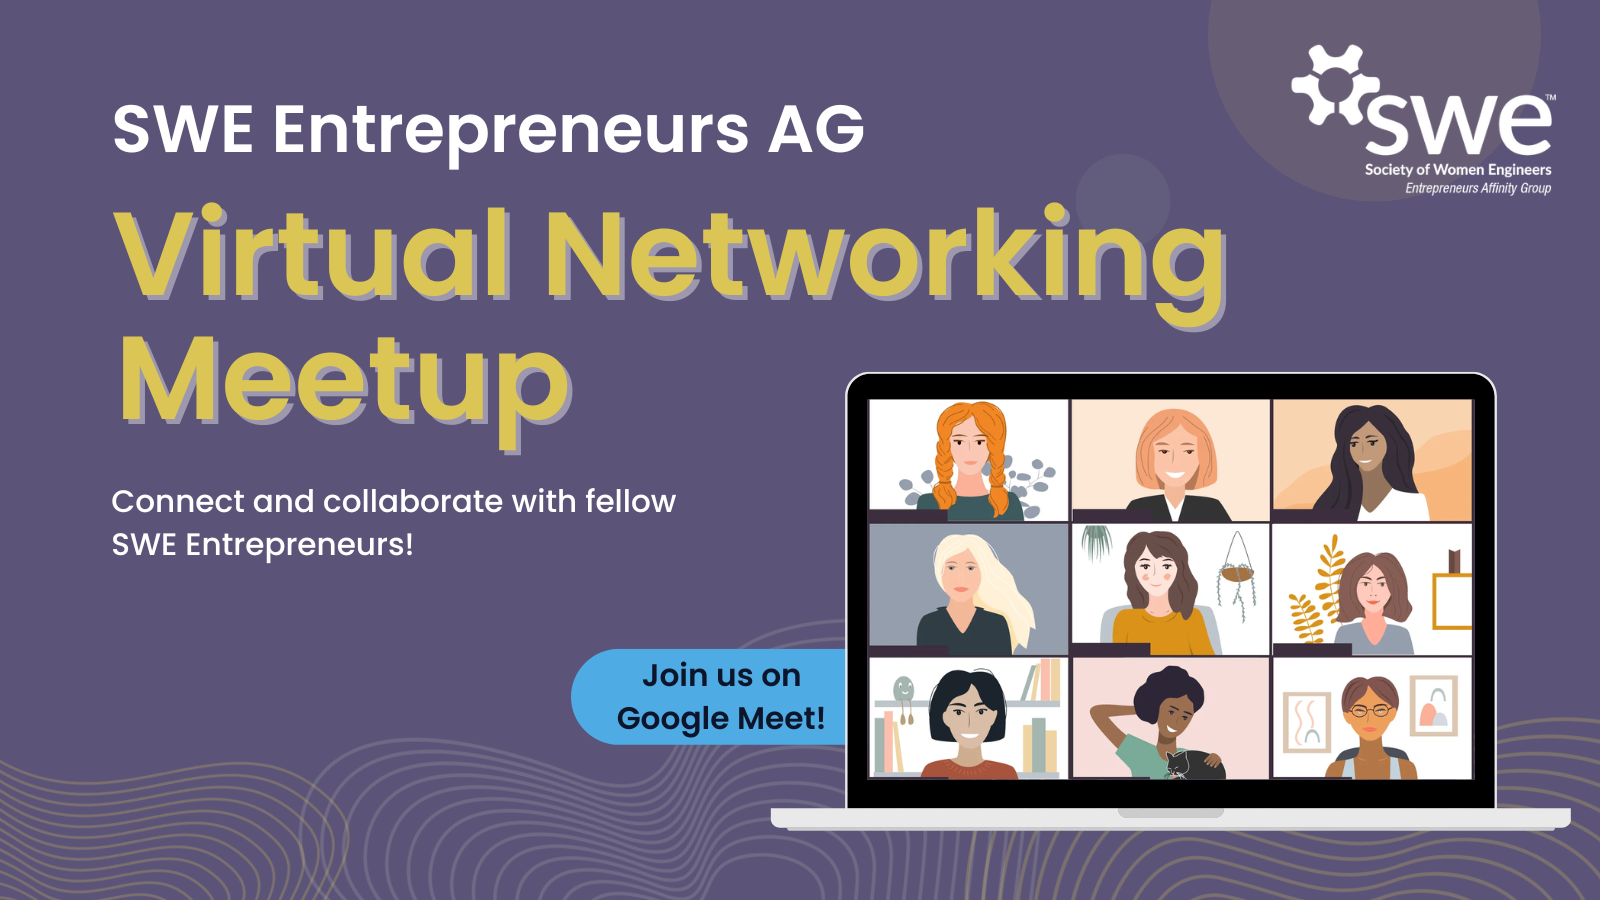 Entrepreneurs AG Virtual Networking Meetup General